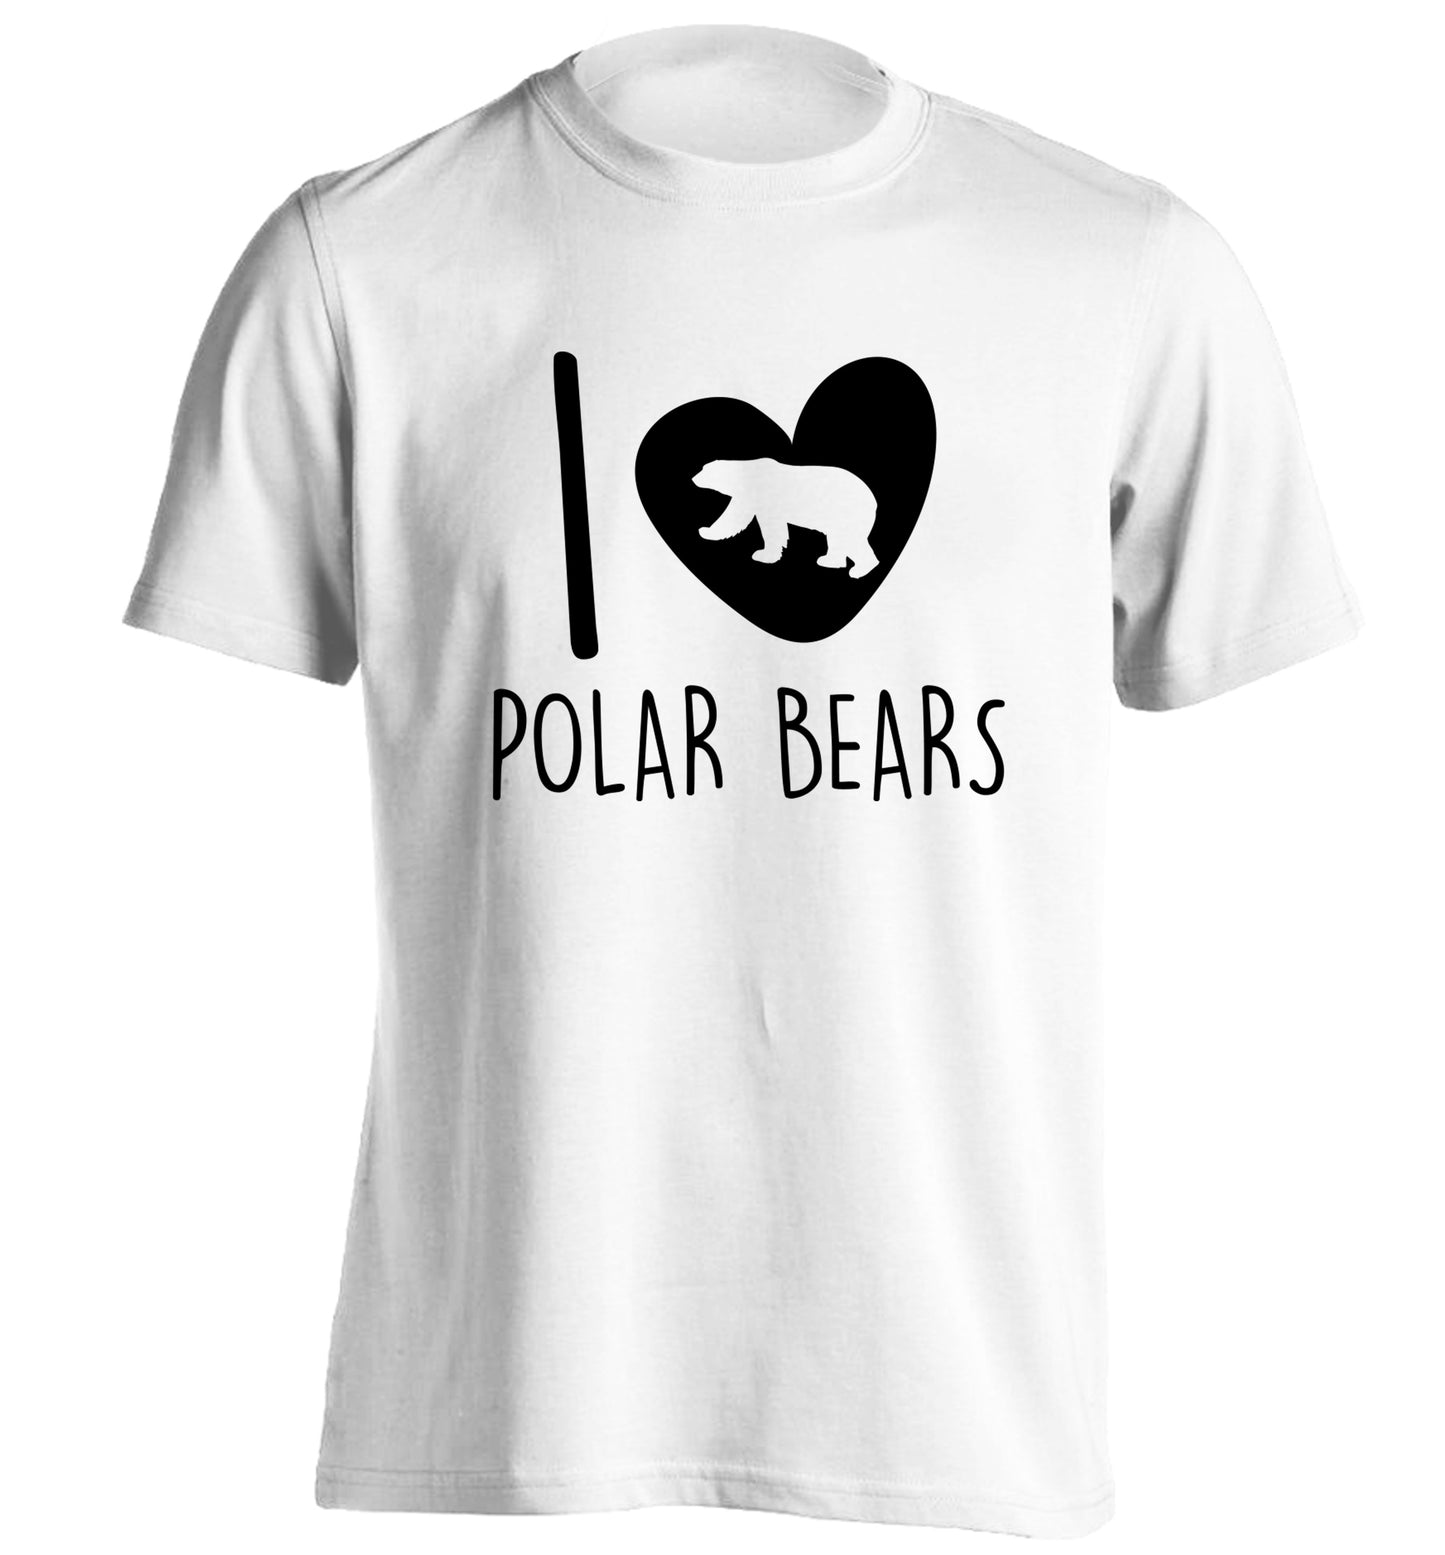 I Love Polar Bears adults unisex white Tshirt 2XL